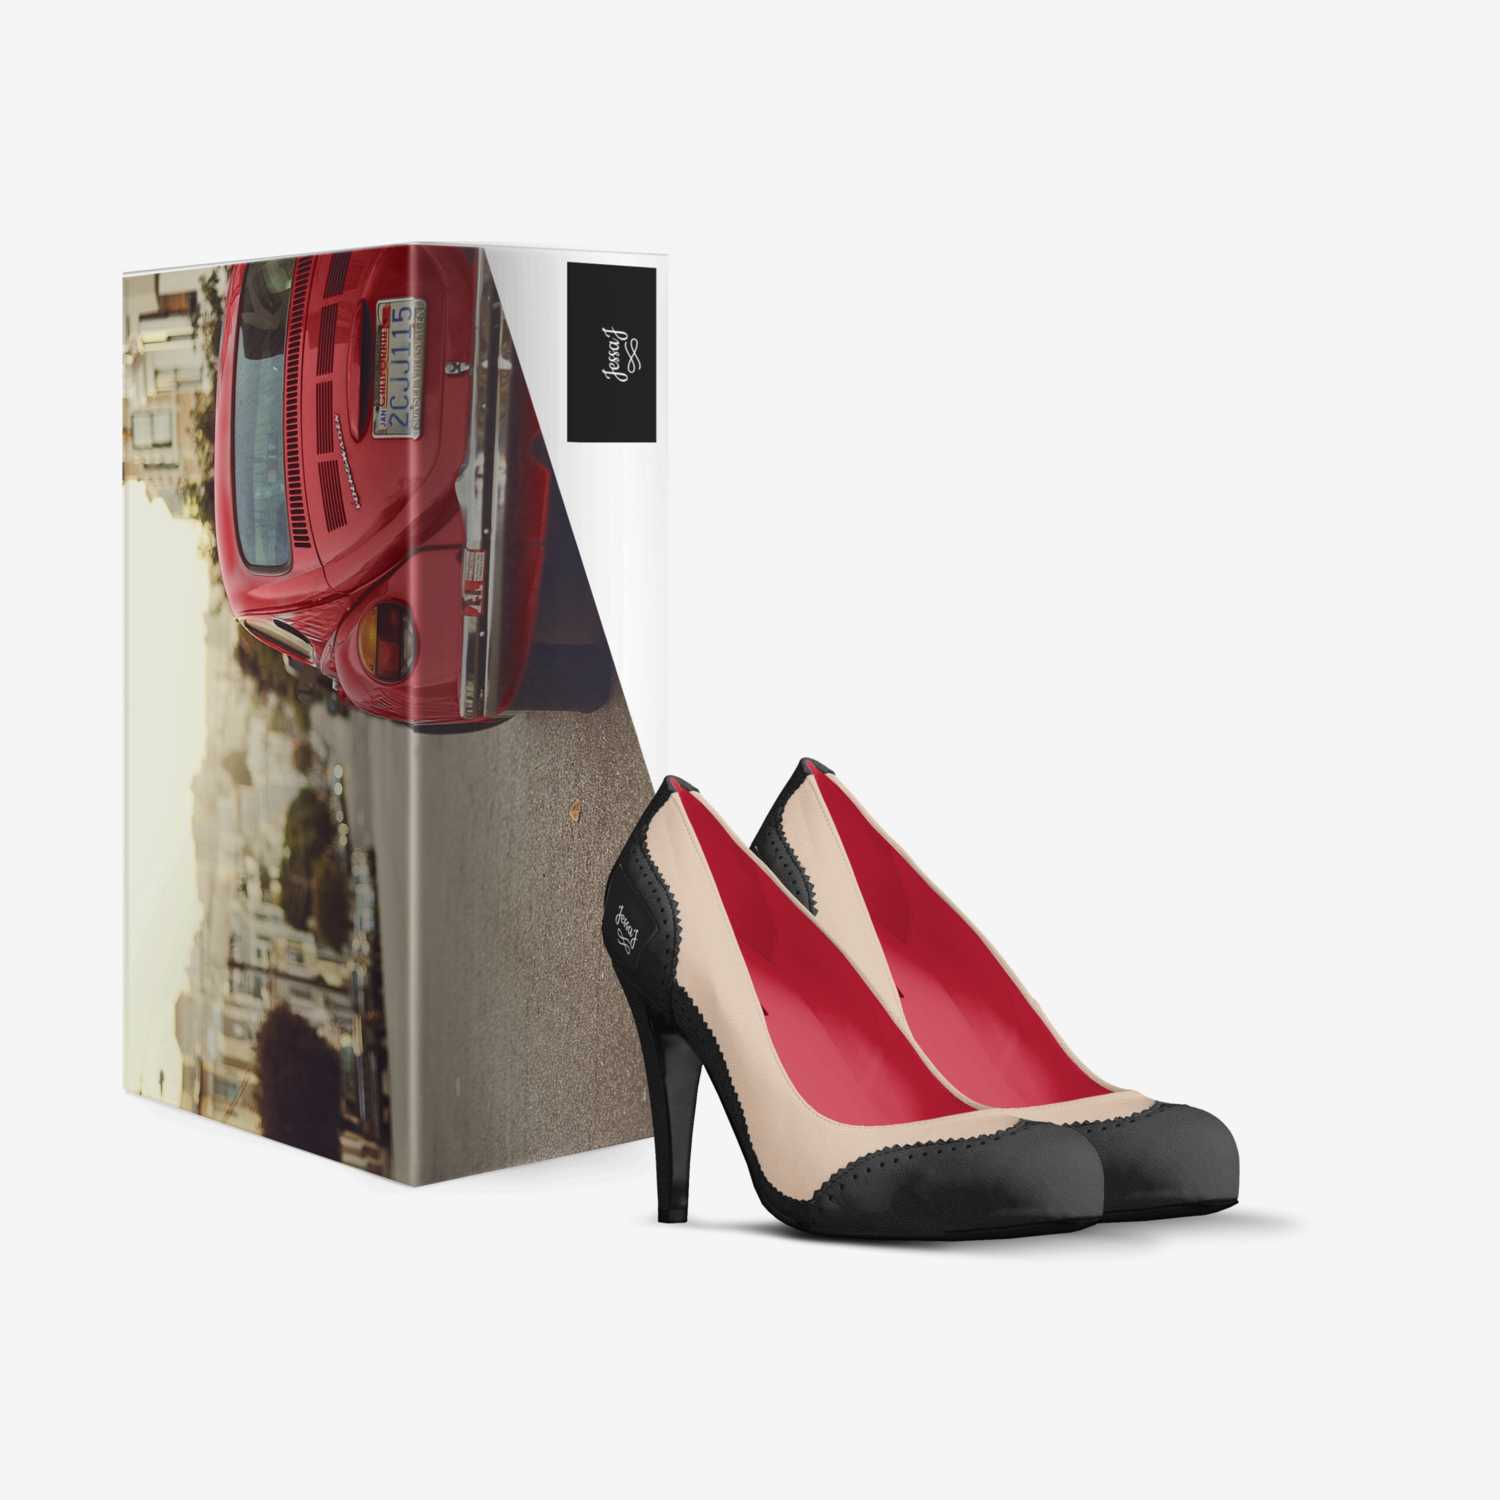 JessaJ custom made in Italy shoes by Jessica Johnson | Box view